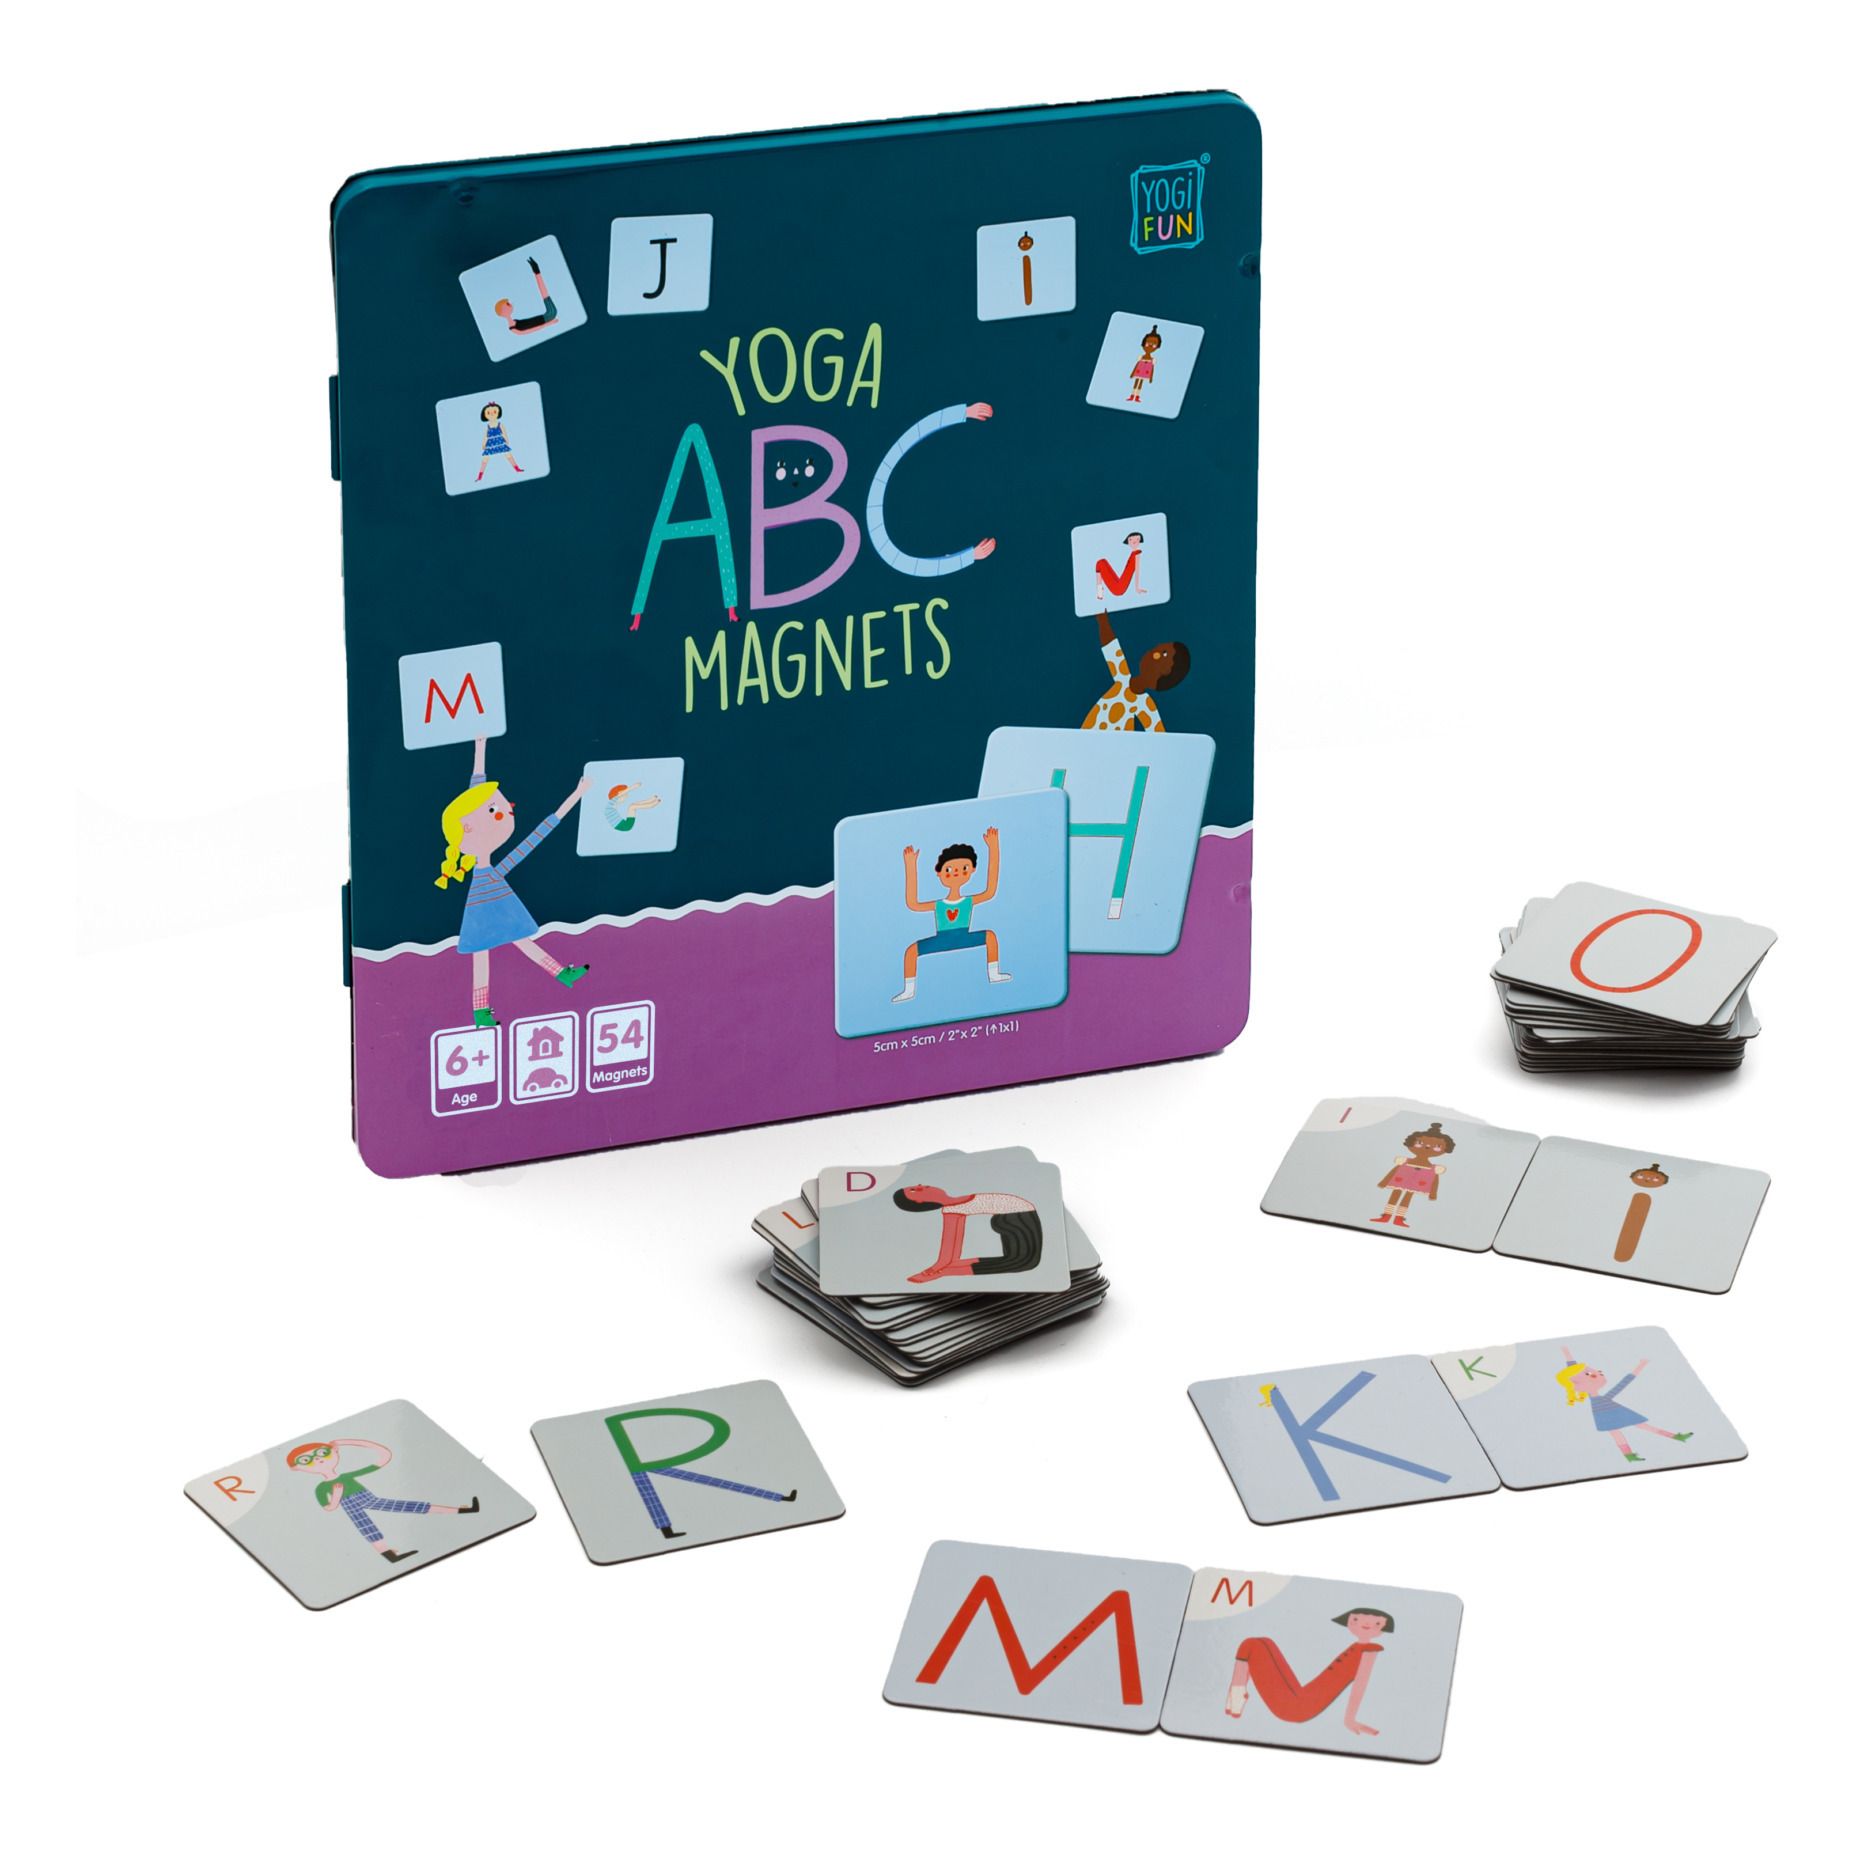 Yogi Fun - ABC Yoga Magnets - Multicolore